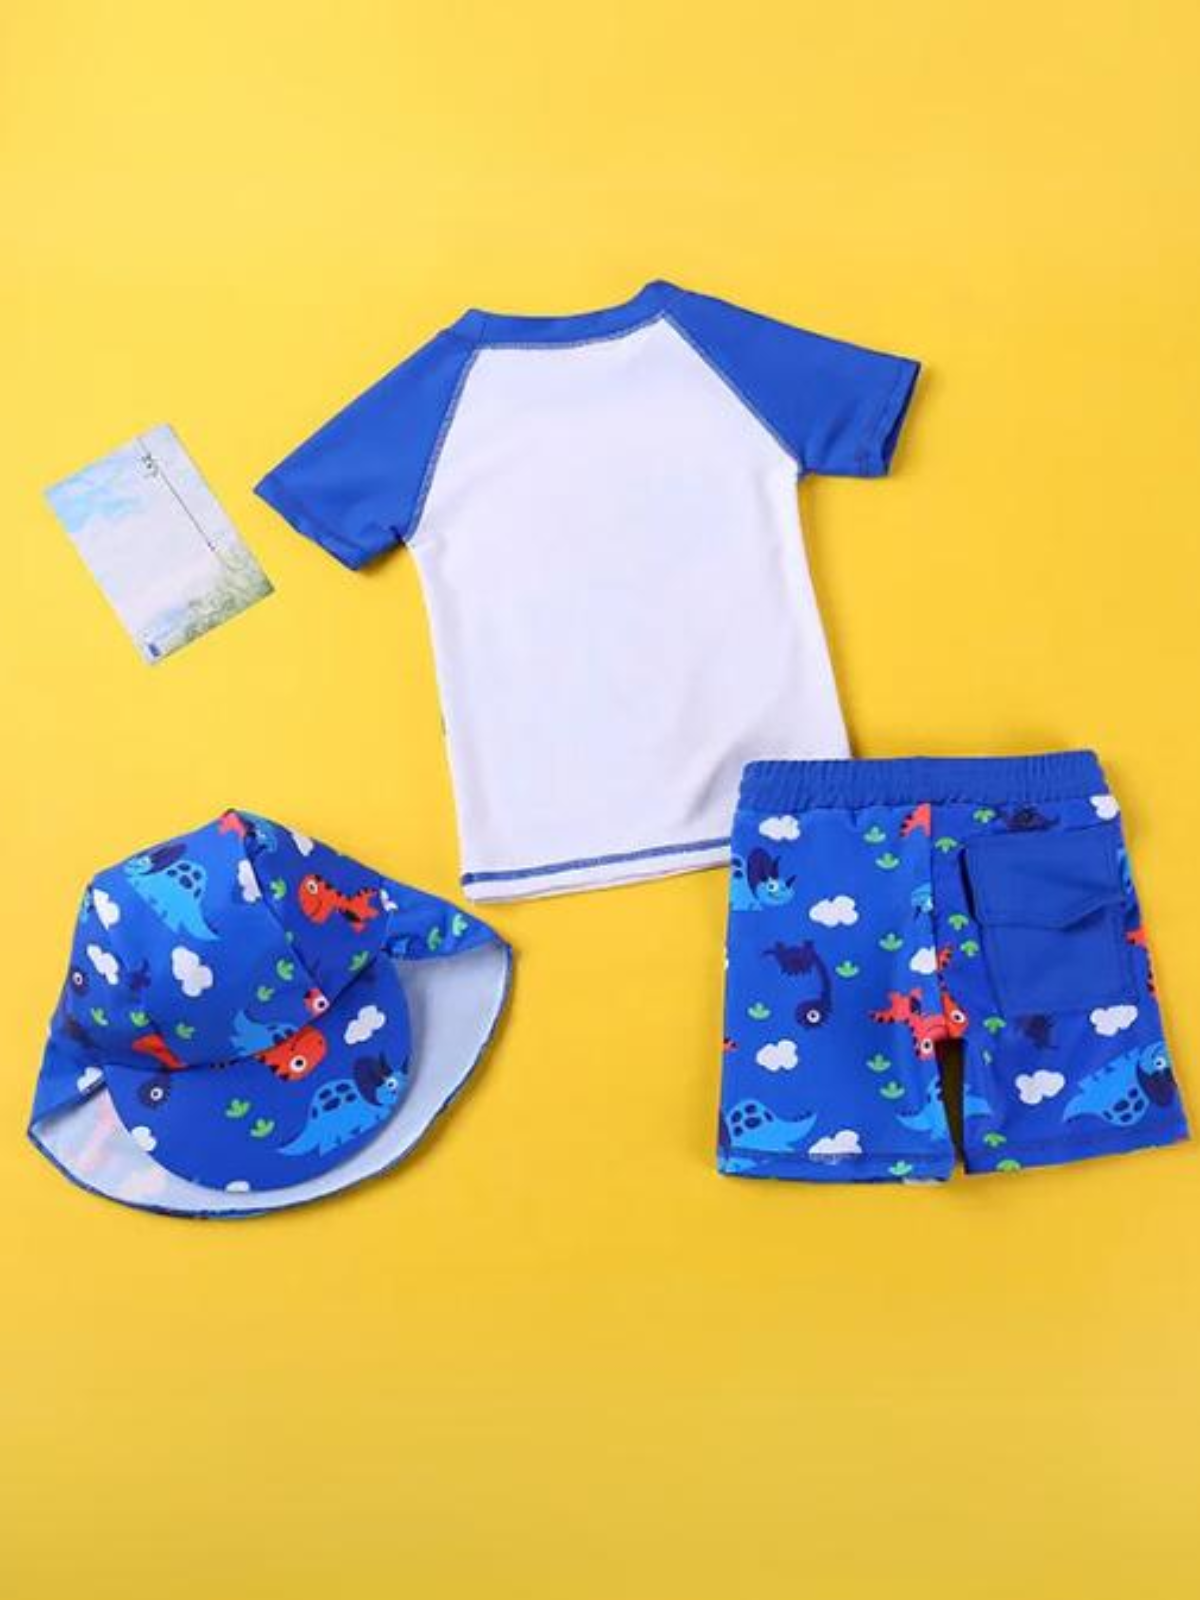 Boys 3pc Swimwear Set | Mia Belle Girls Summer Outfits